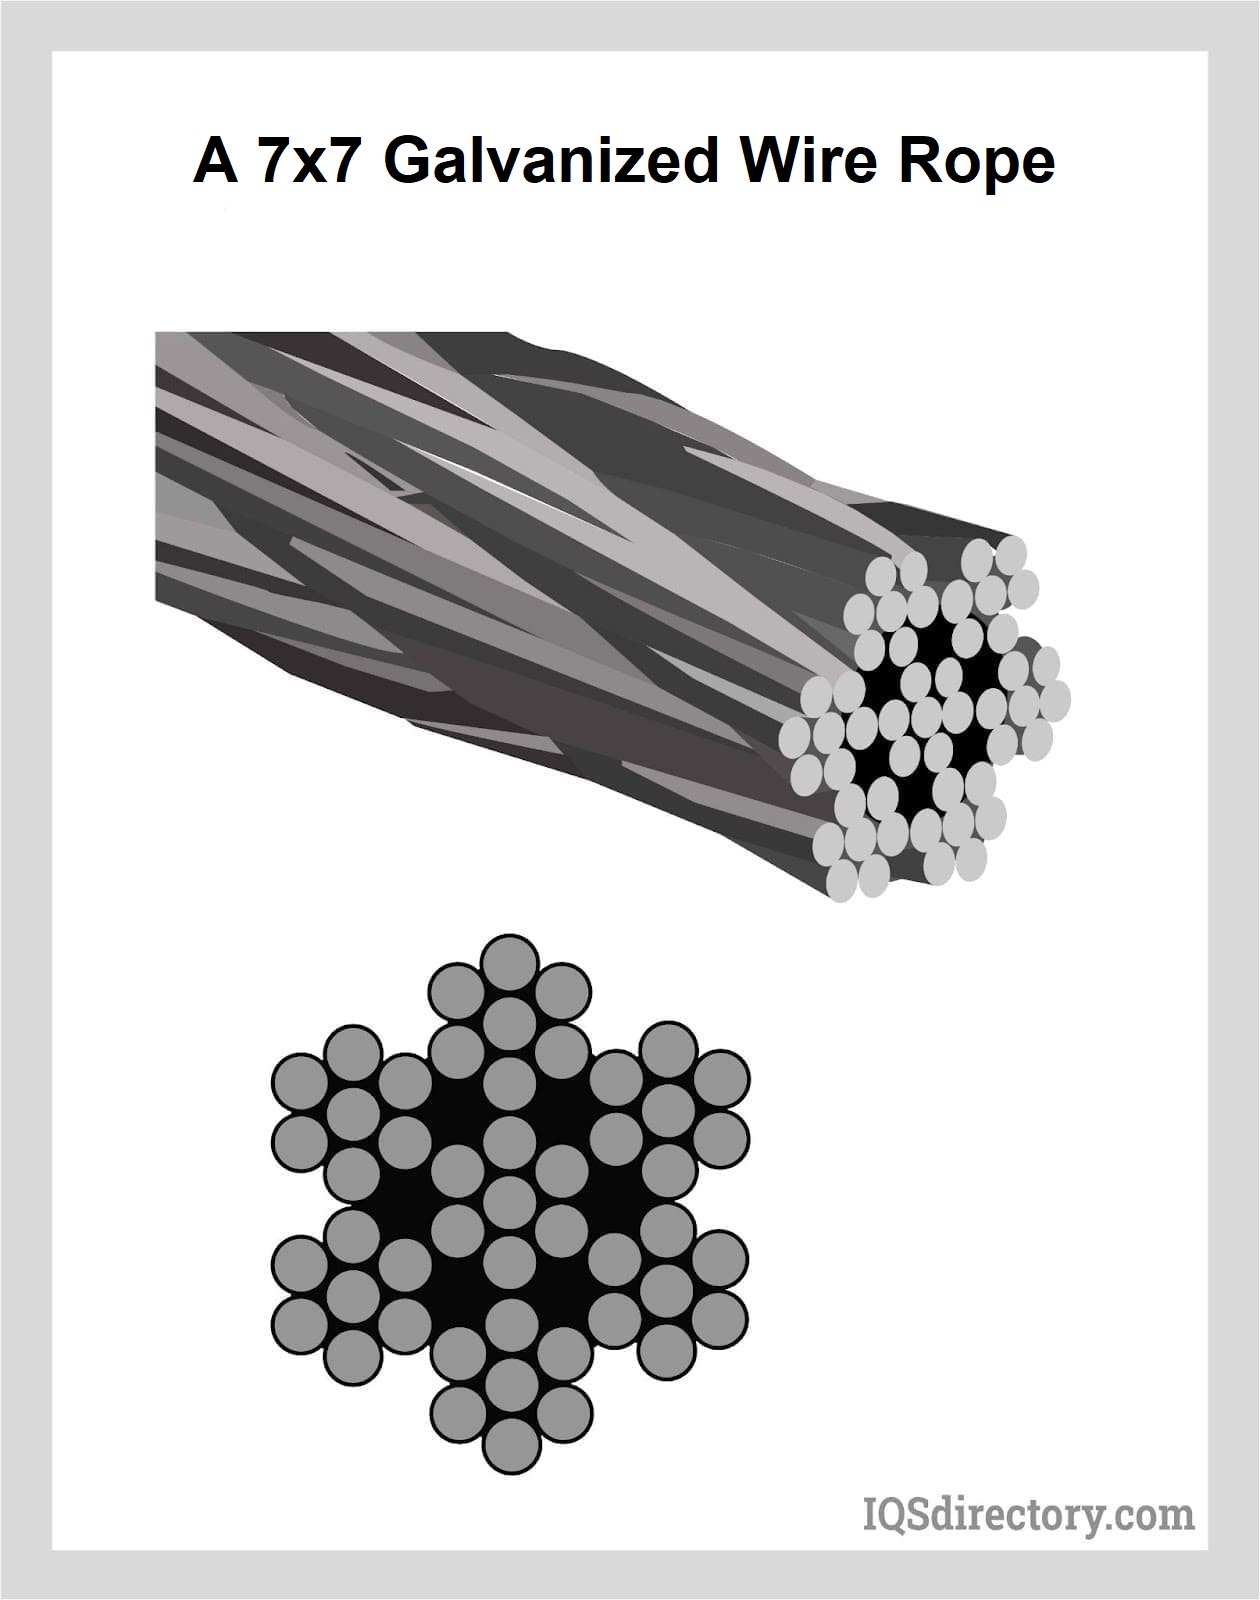 A 7/7 Galvanized Wire Rope